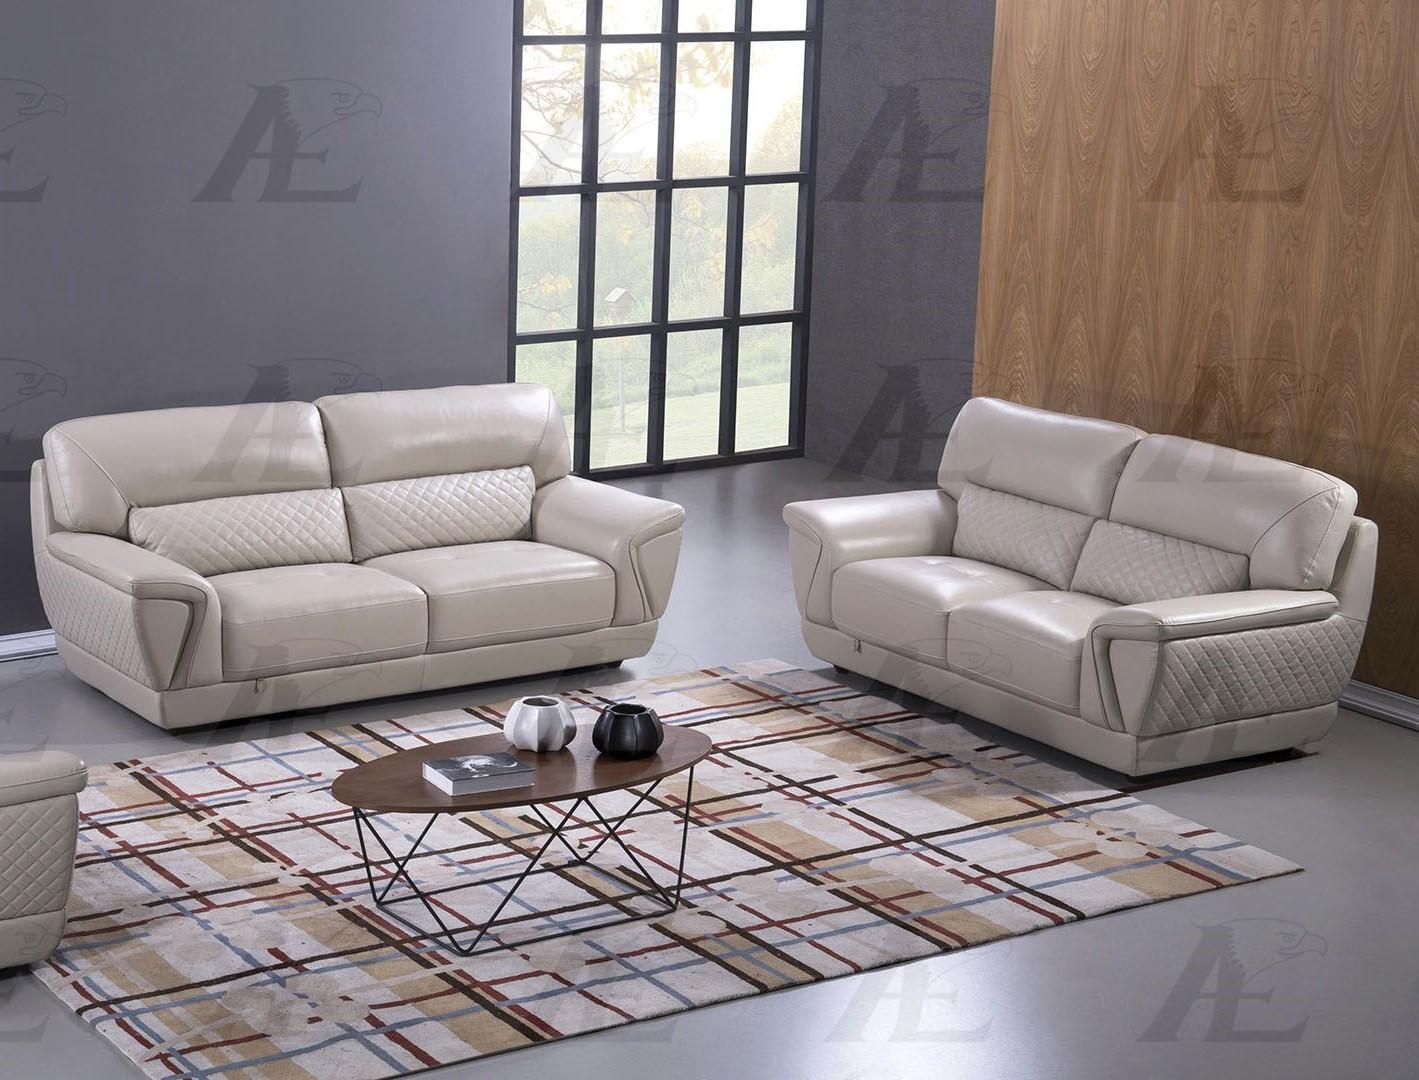 

    
EK099-LG-LS American Eagle Furniture Loveseat
